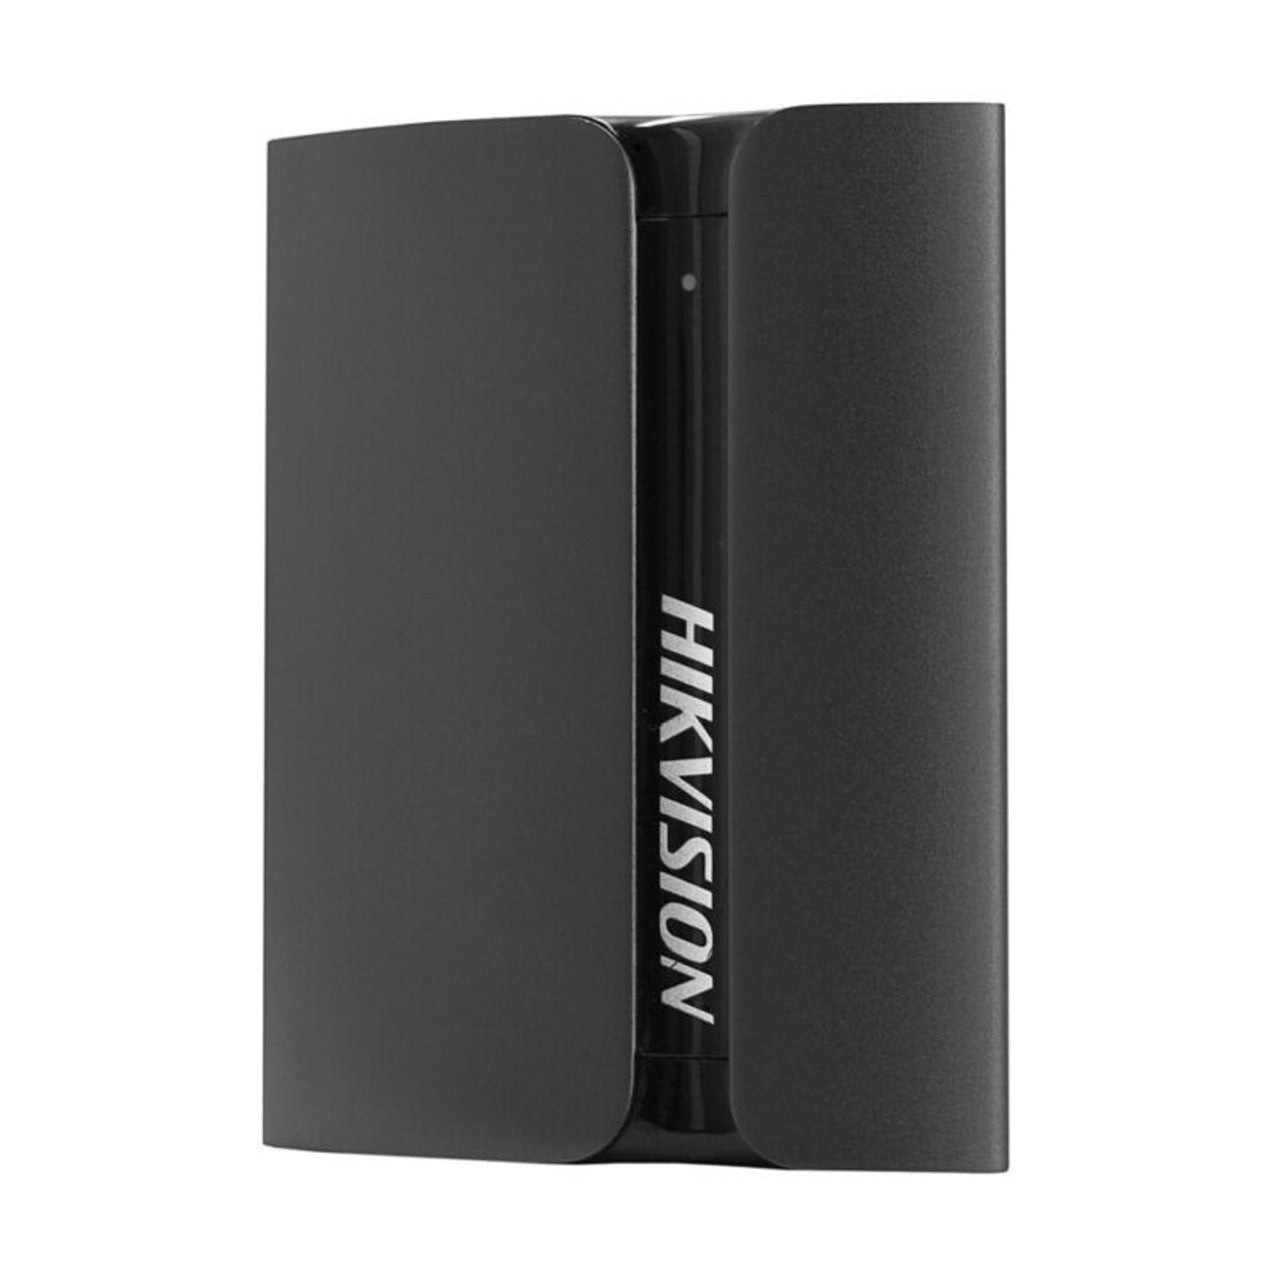 HikVision T300S Portable External SSD